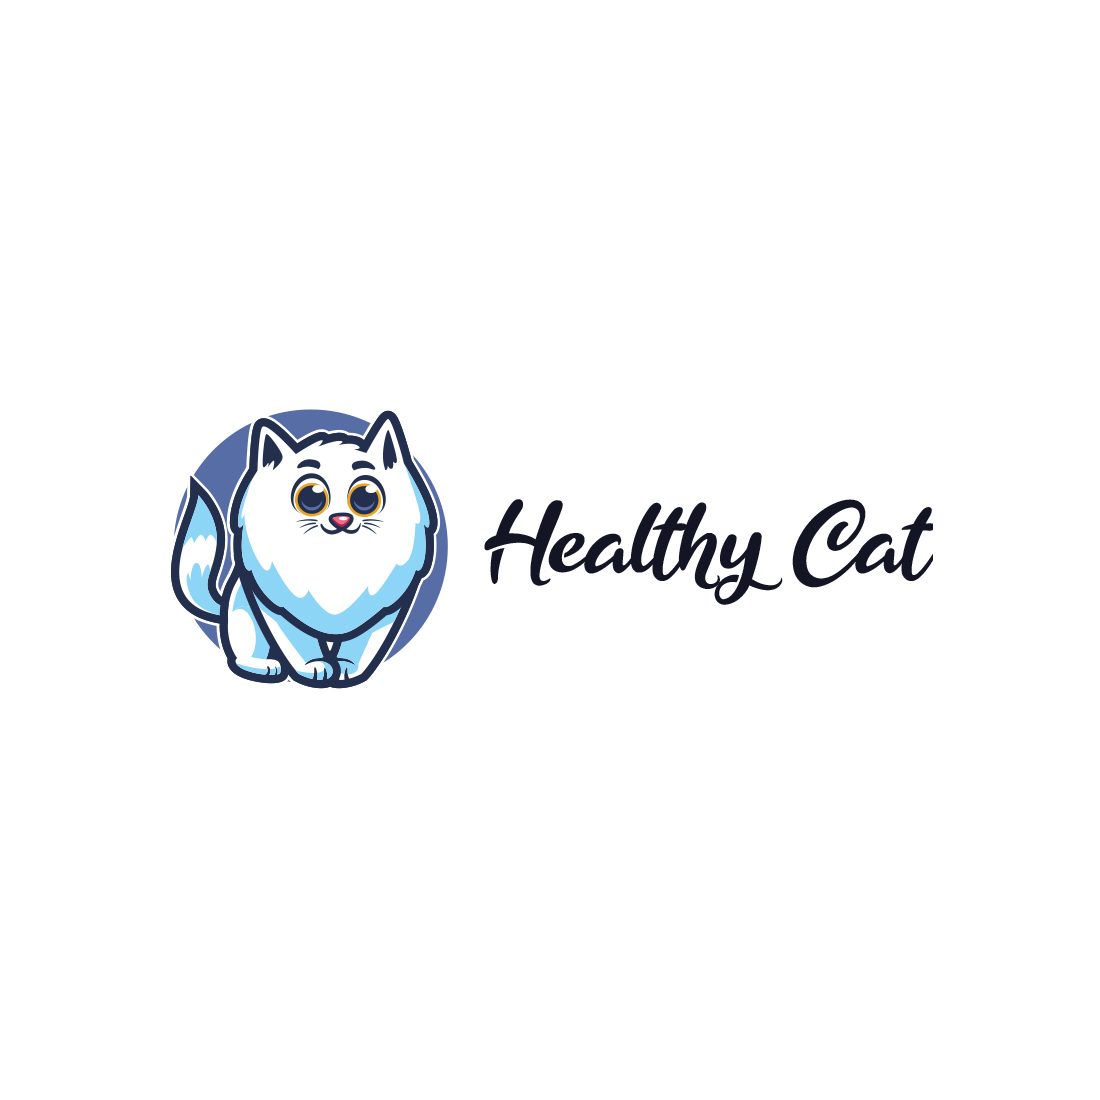 Healthy Cat Logo Design cover image.